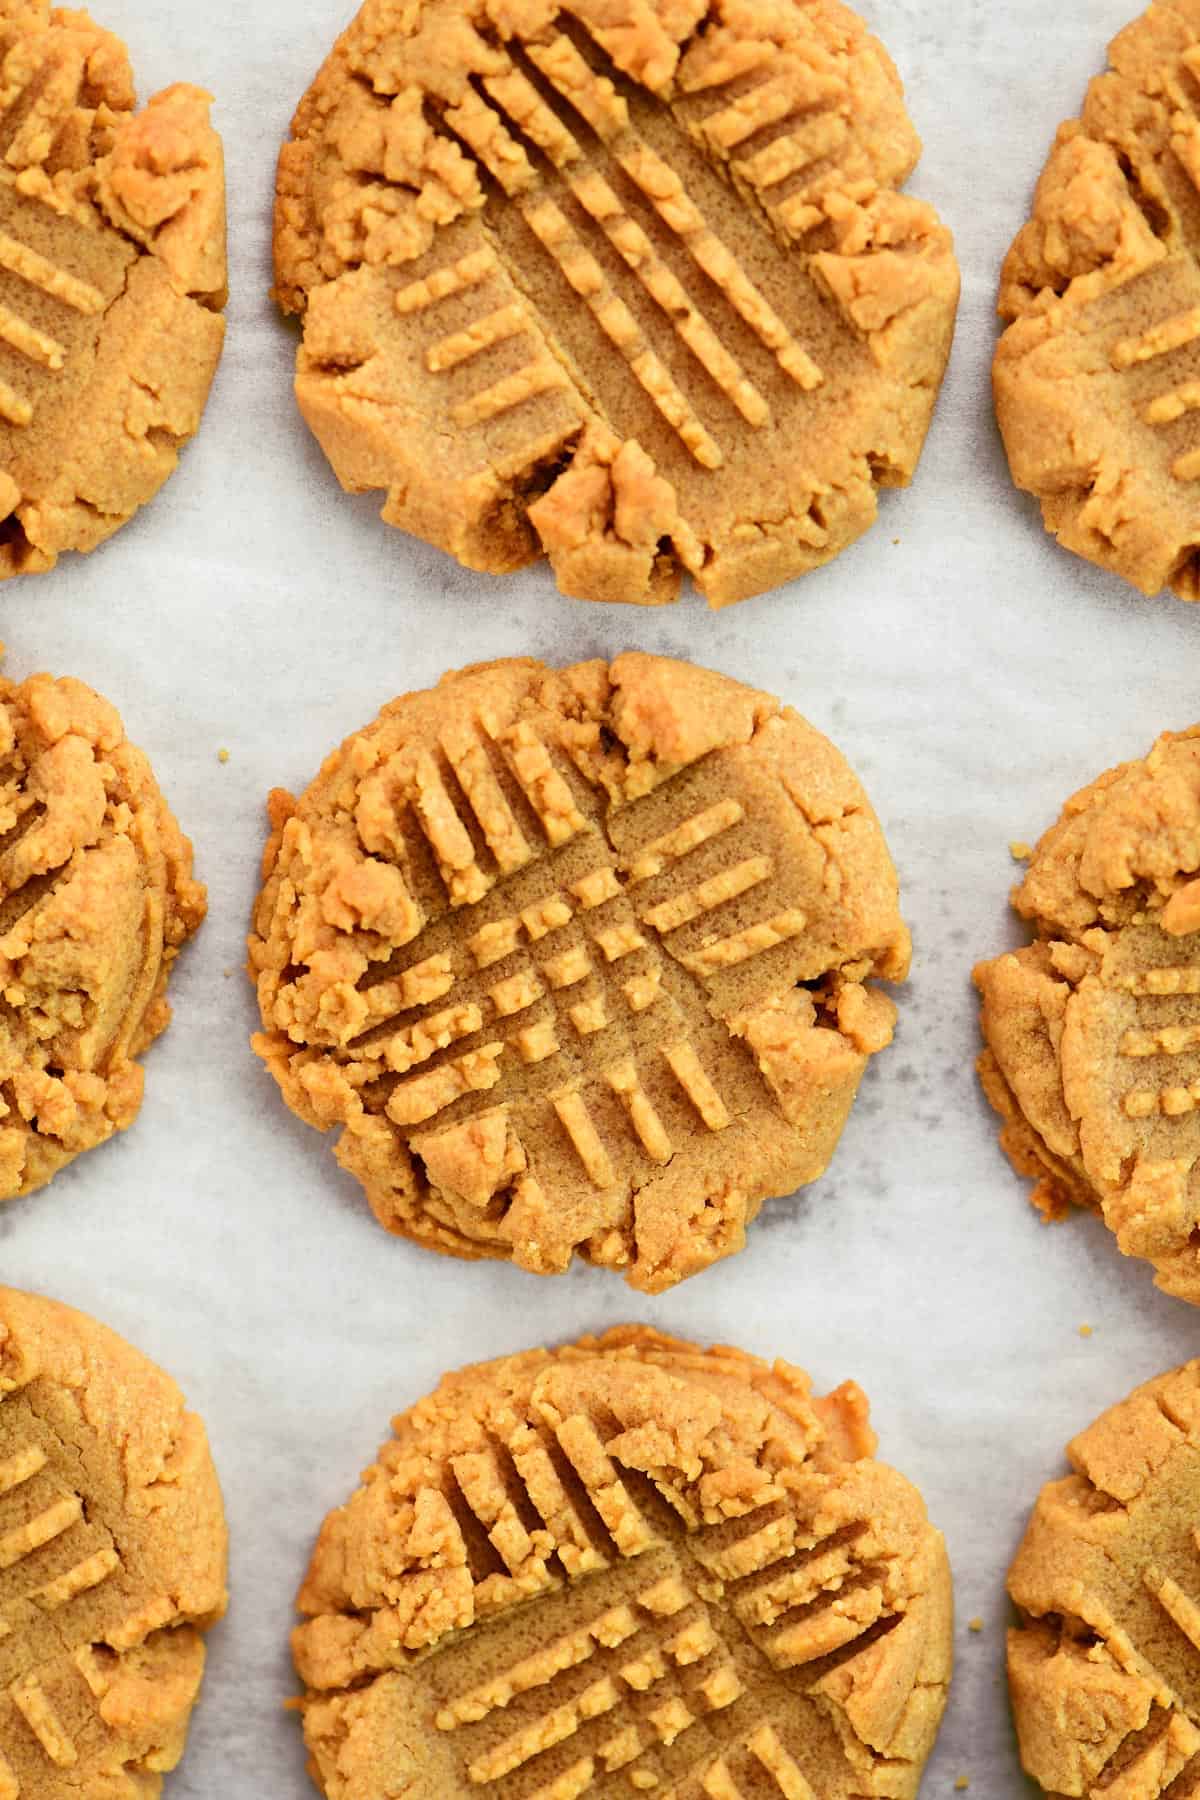 Baked 4-ingredient peanut butter cookies.